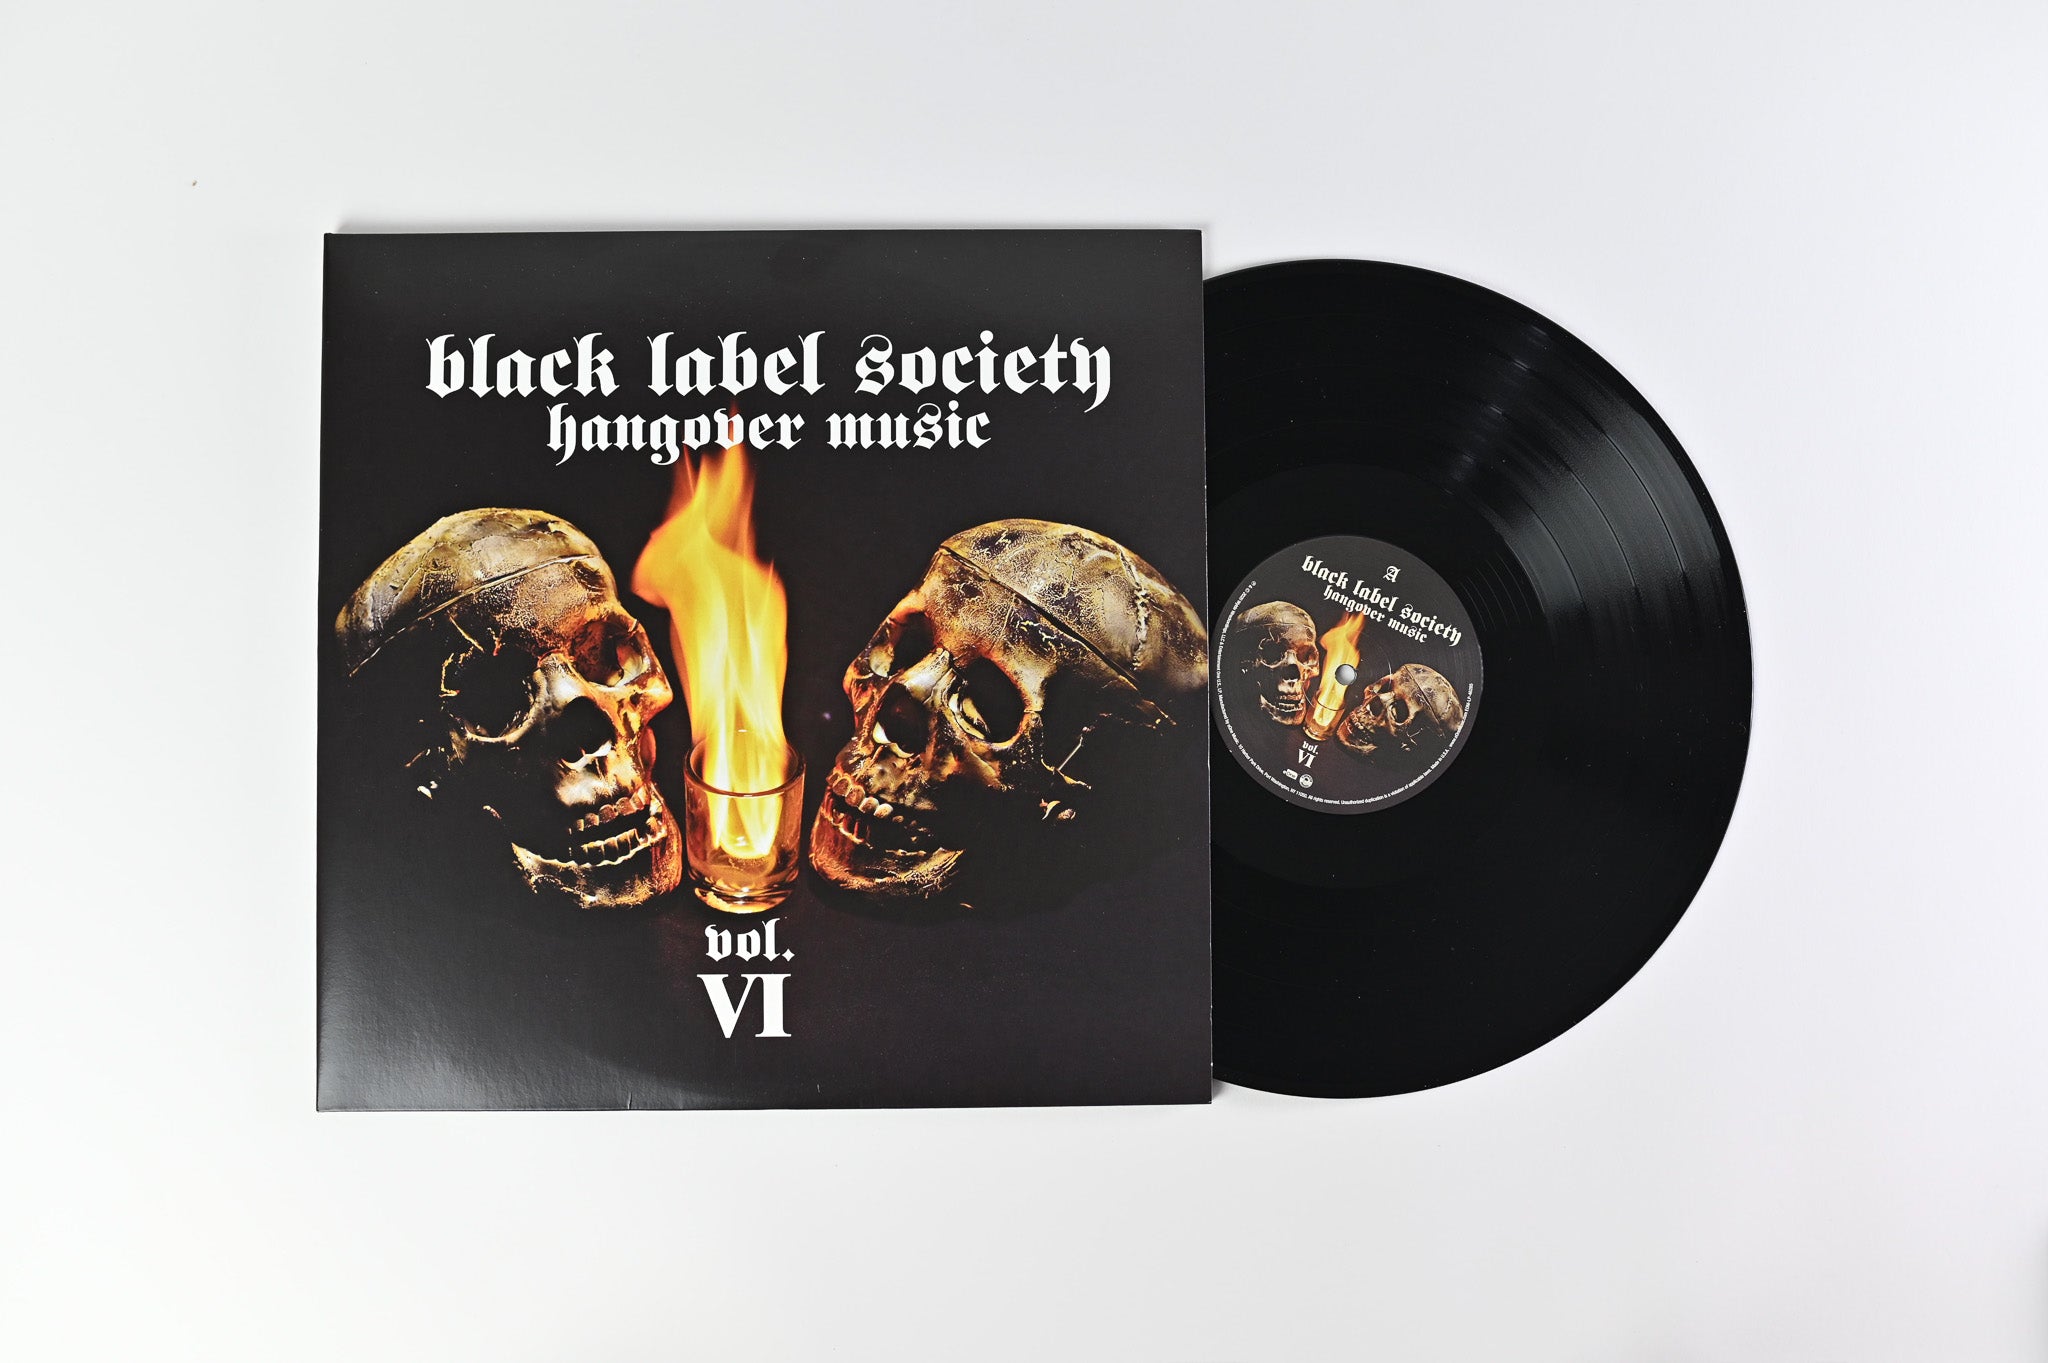 Black Label Society - Hangover Music Vol. VI on eOne Reissue